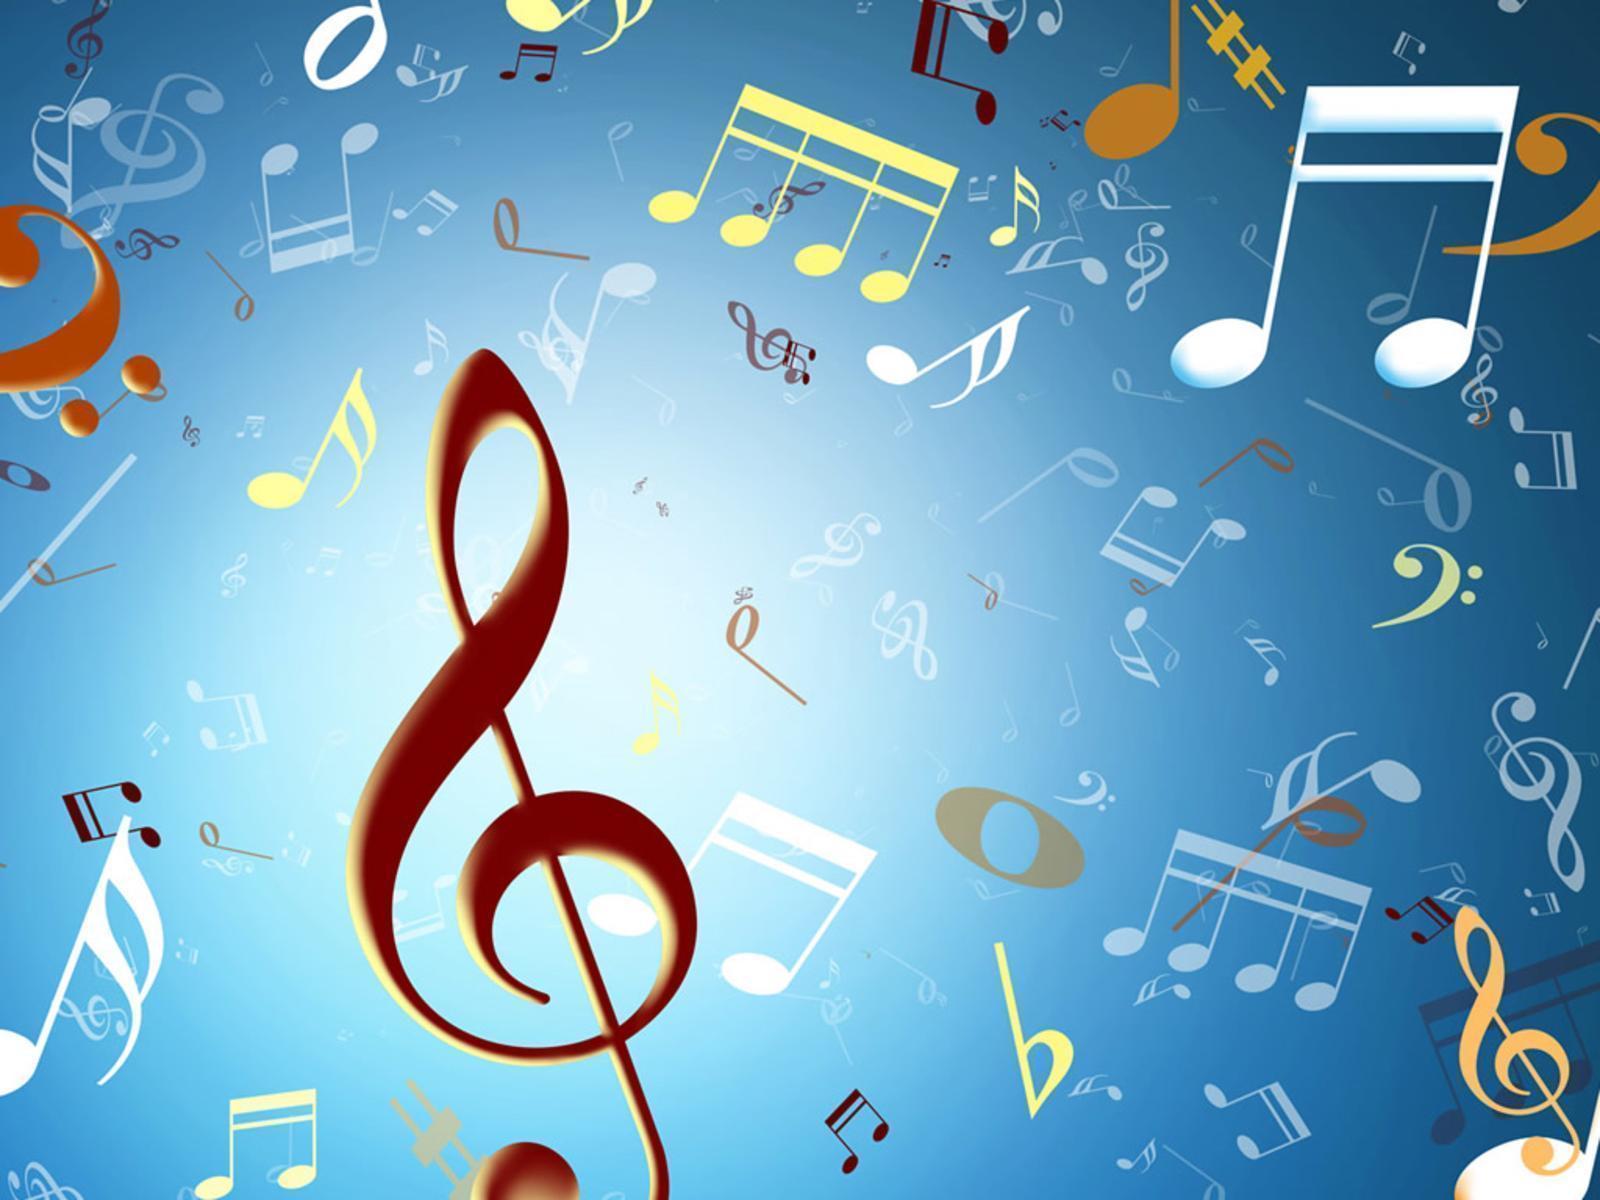 Happy music free desktop background wallpaper image